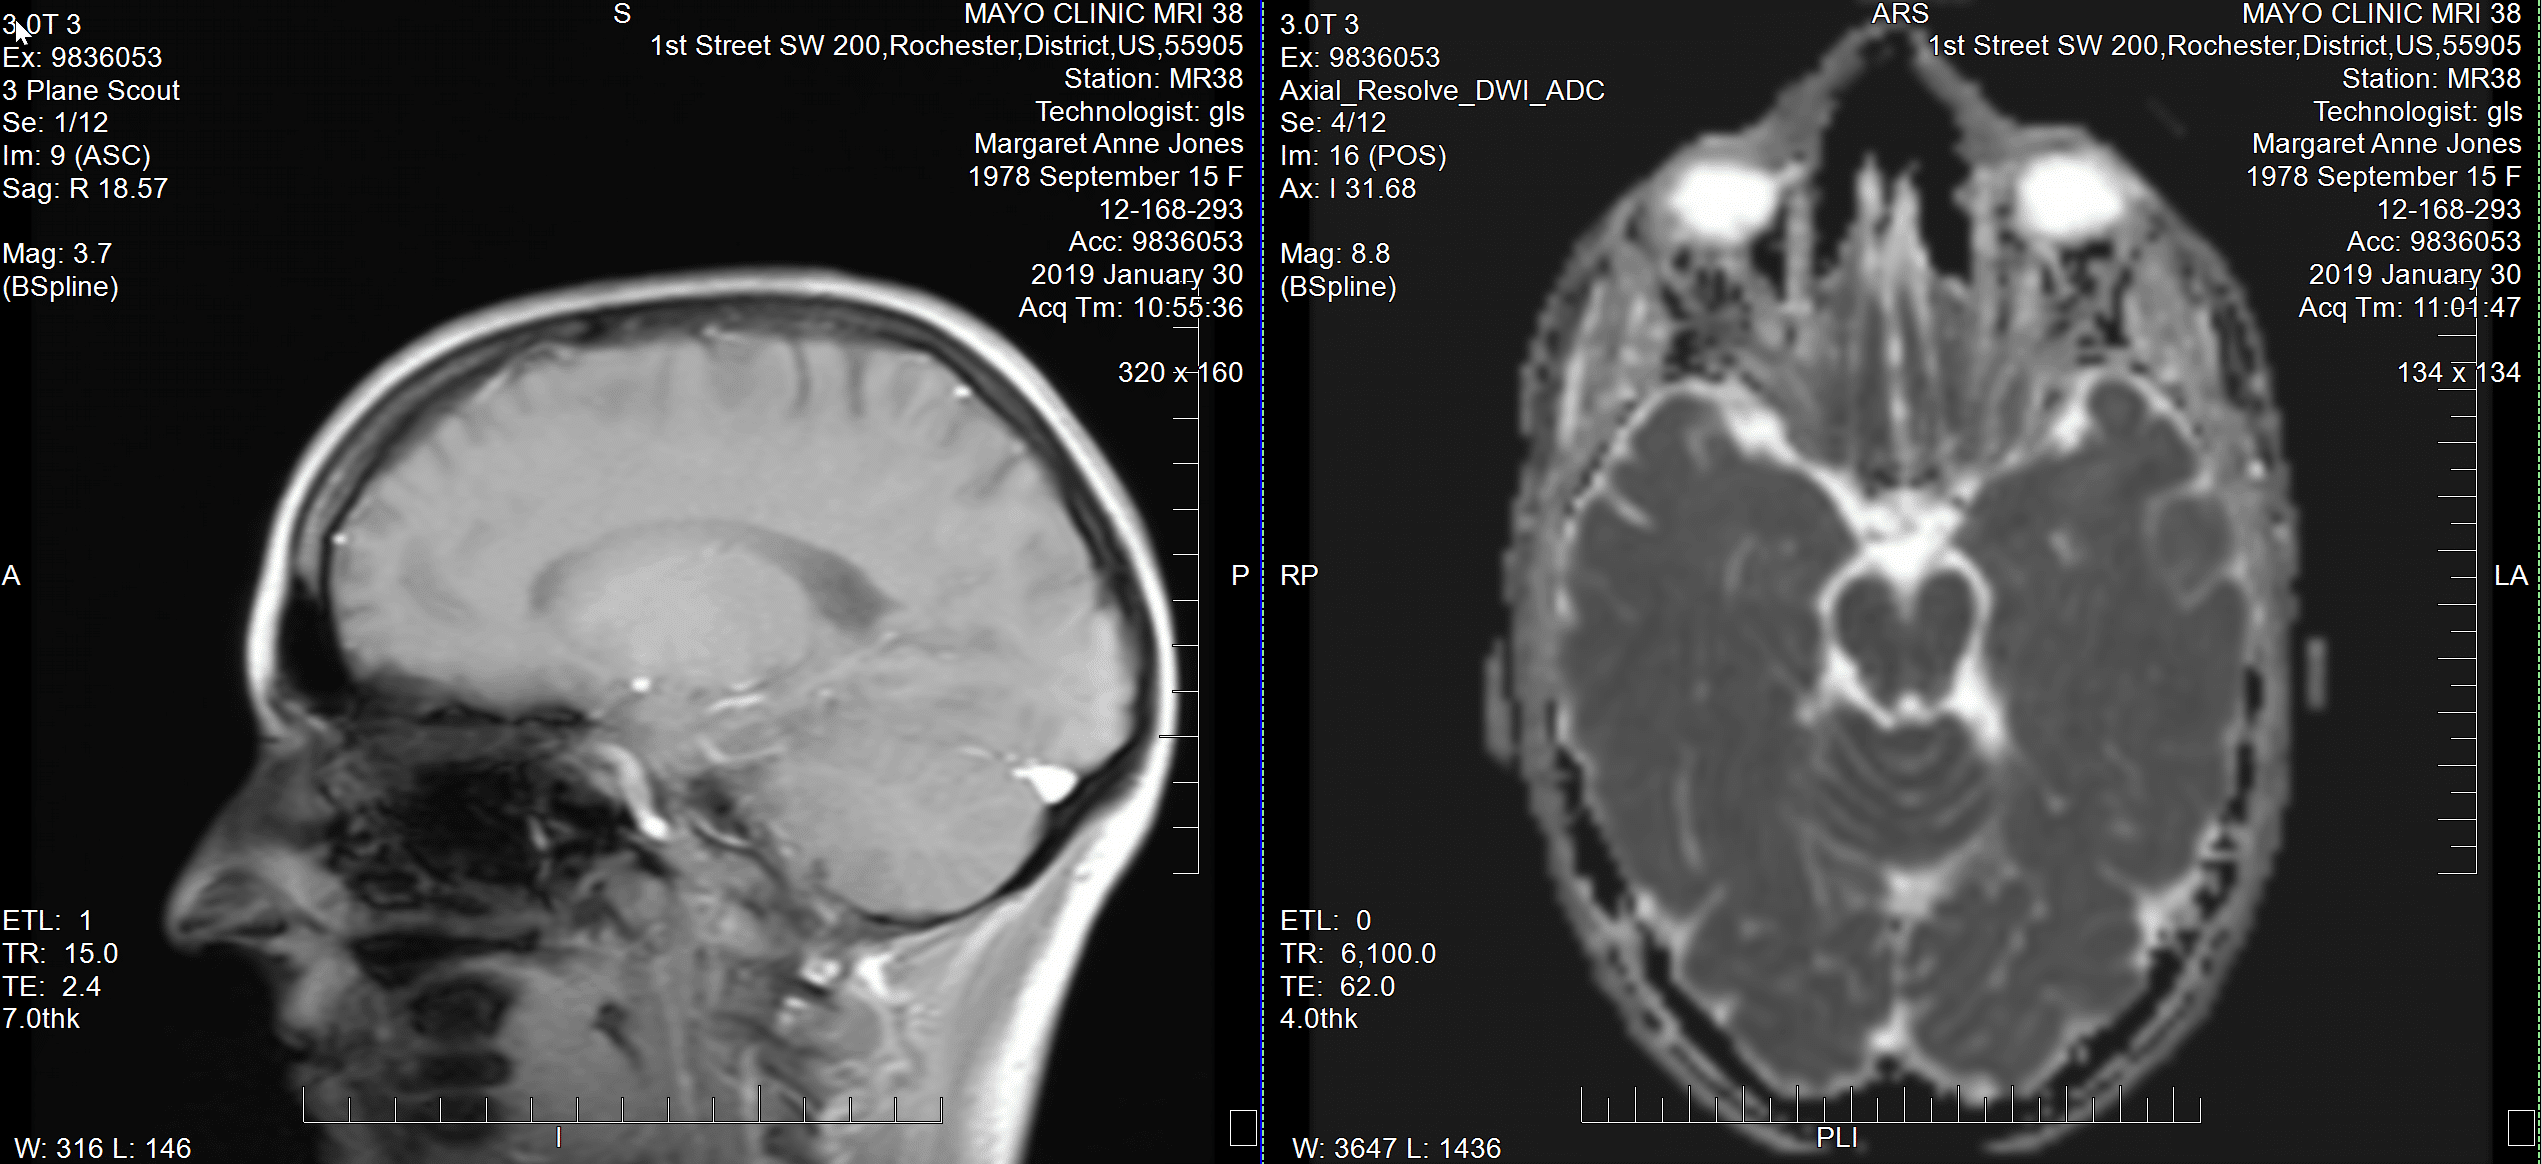 Maggie's Brain MRI